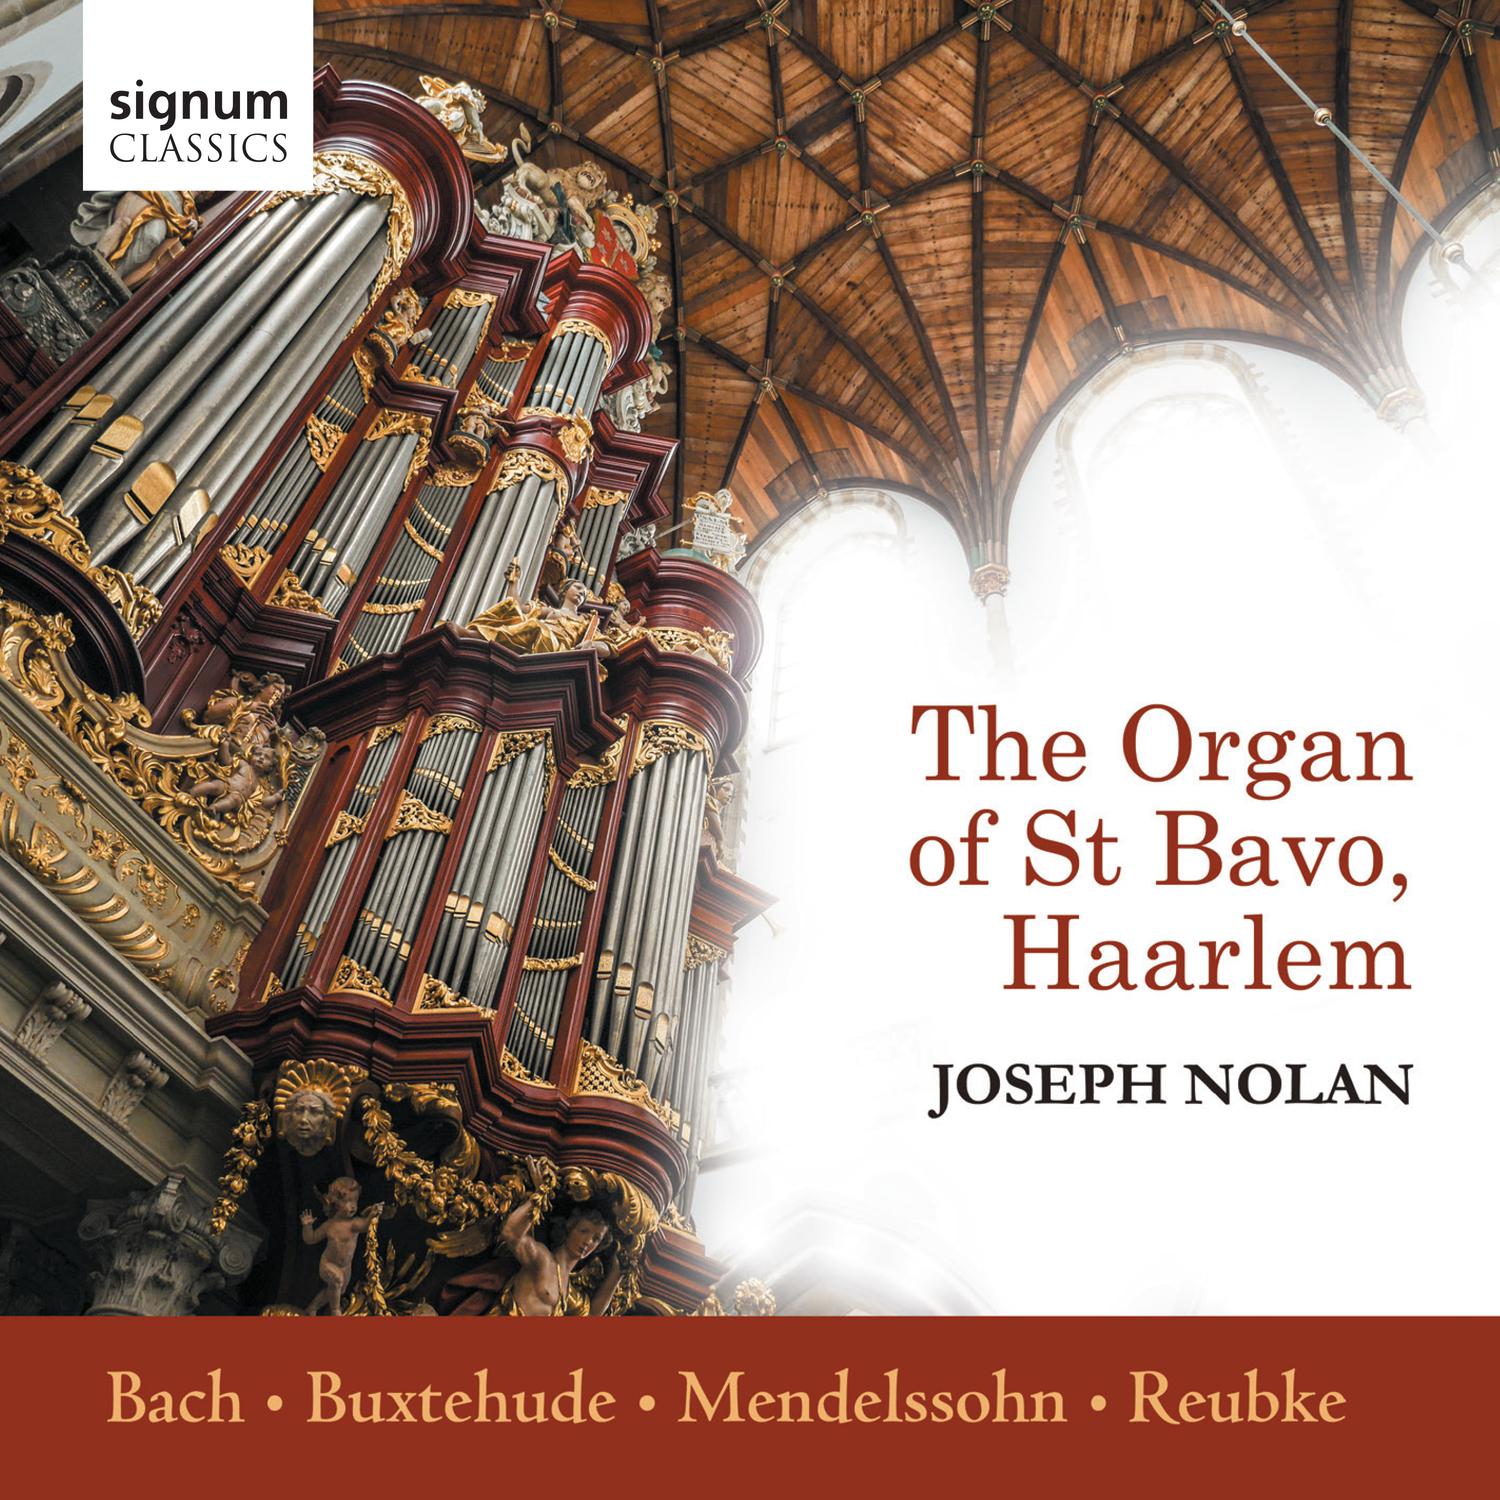 The Organ of St Bavo, Haarlem: Bach, Buxtehude, Mendelssohn, Reubke